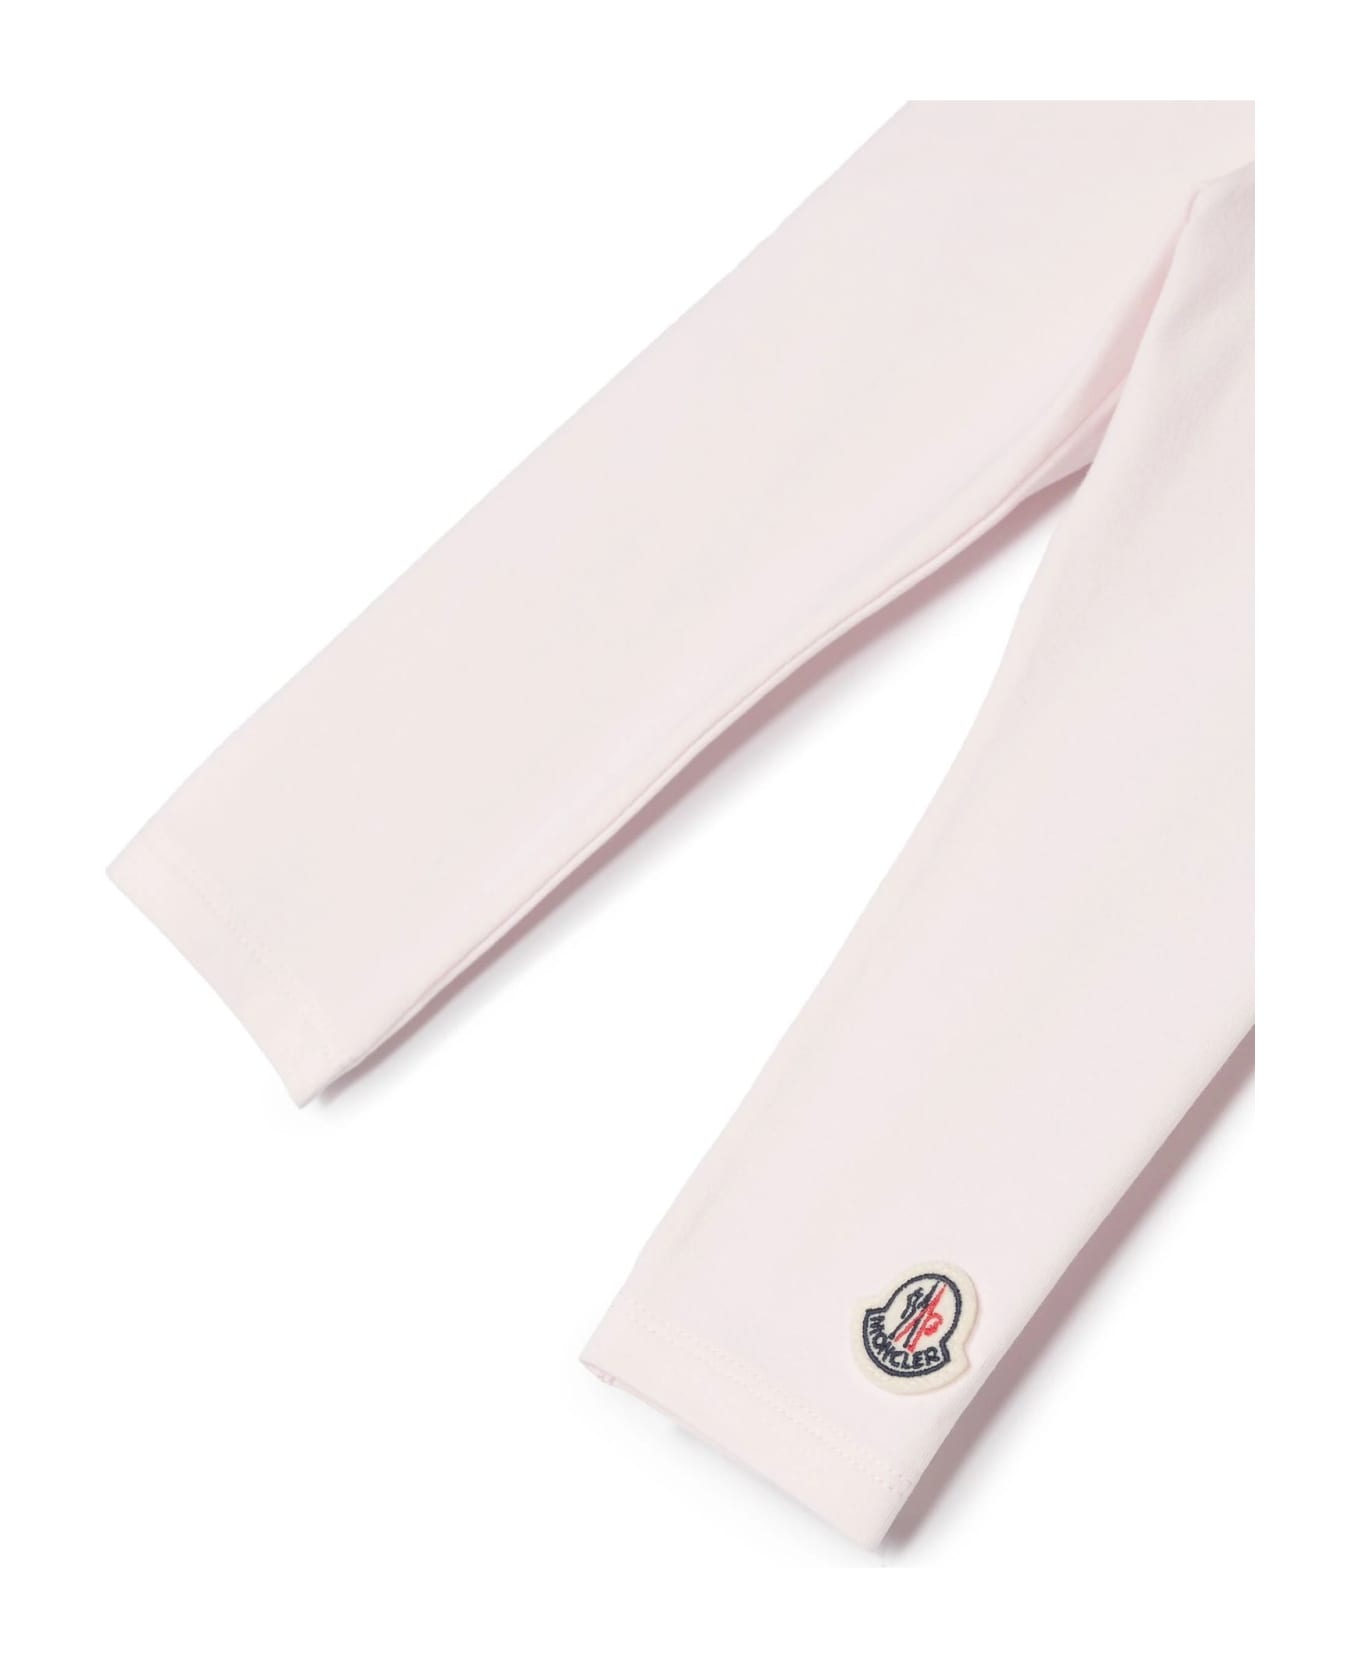 Moncler New Maya Trousers Pink - Pink